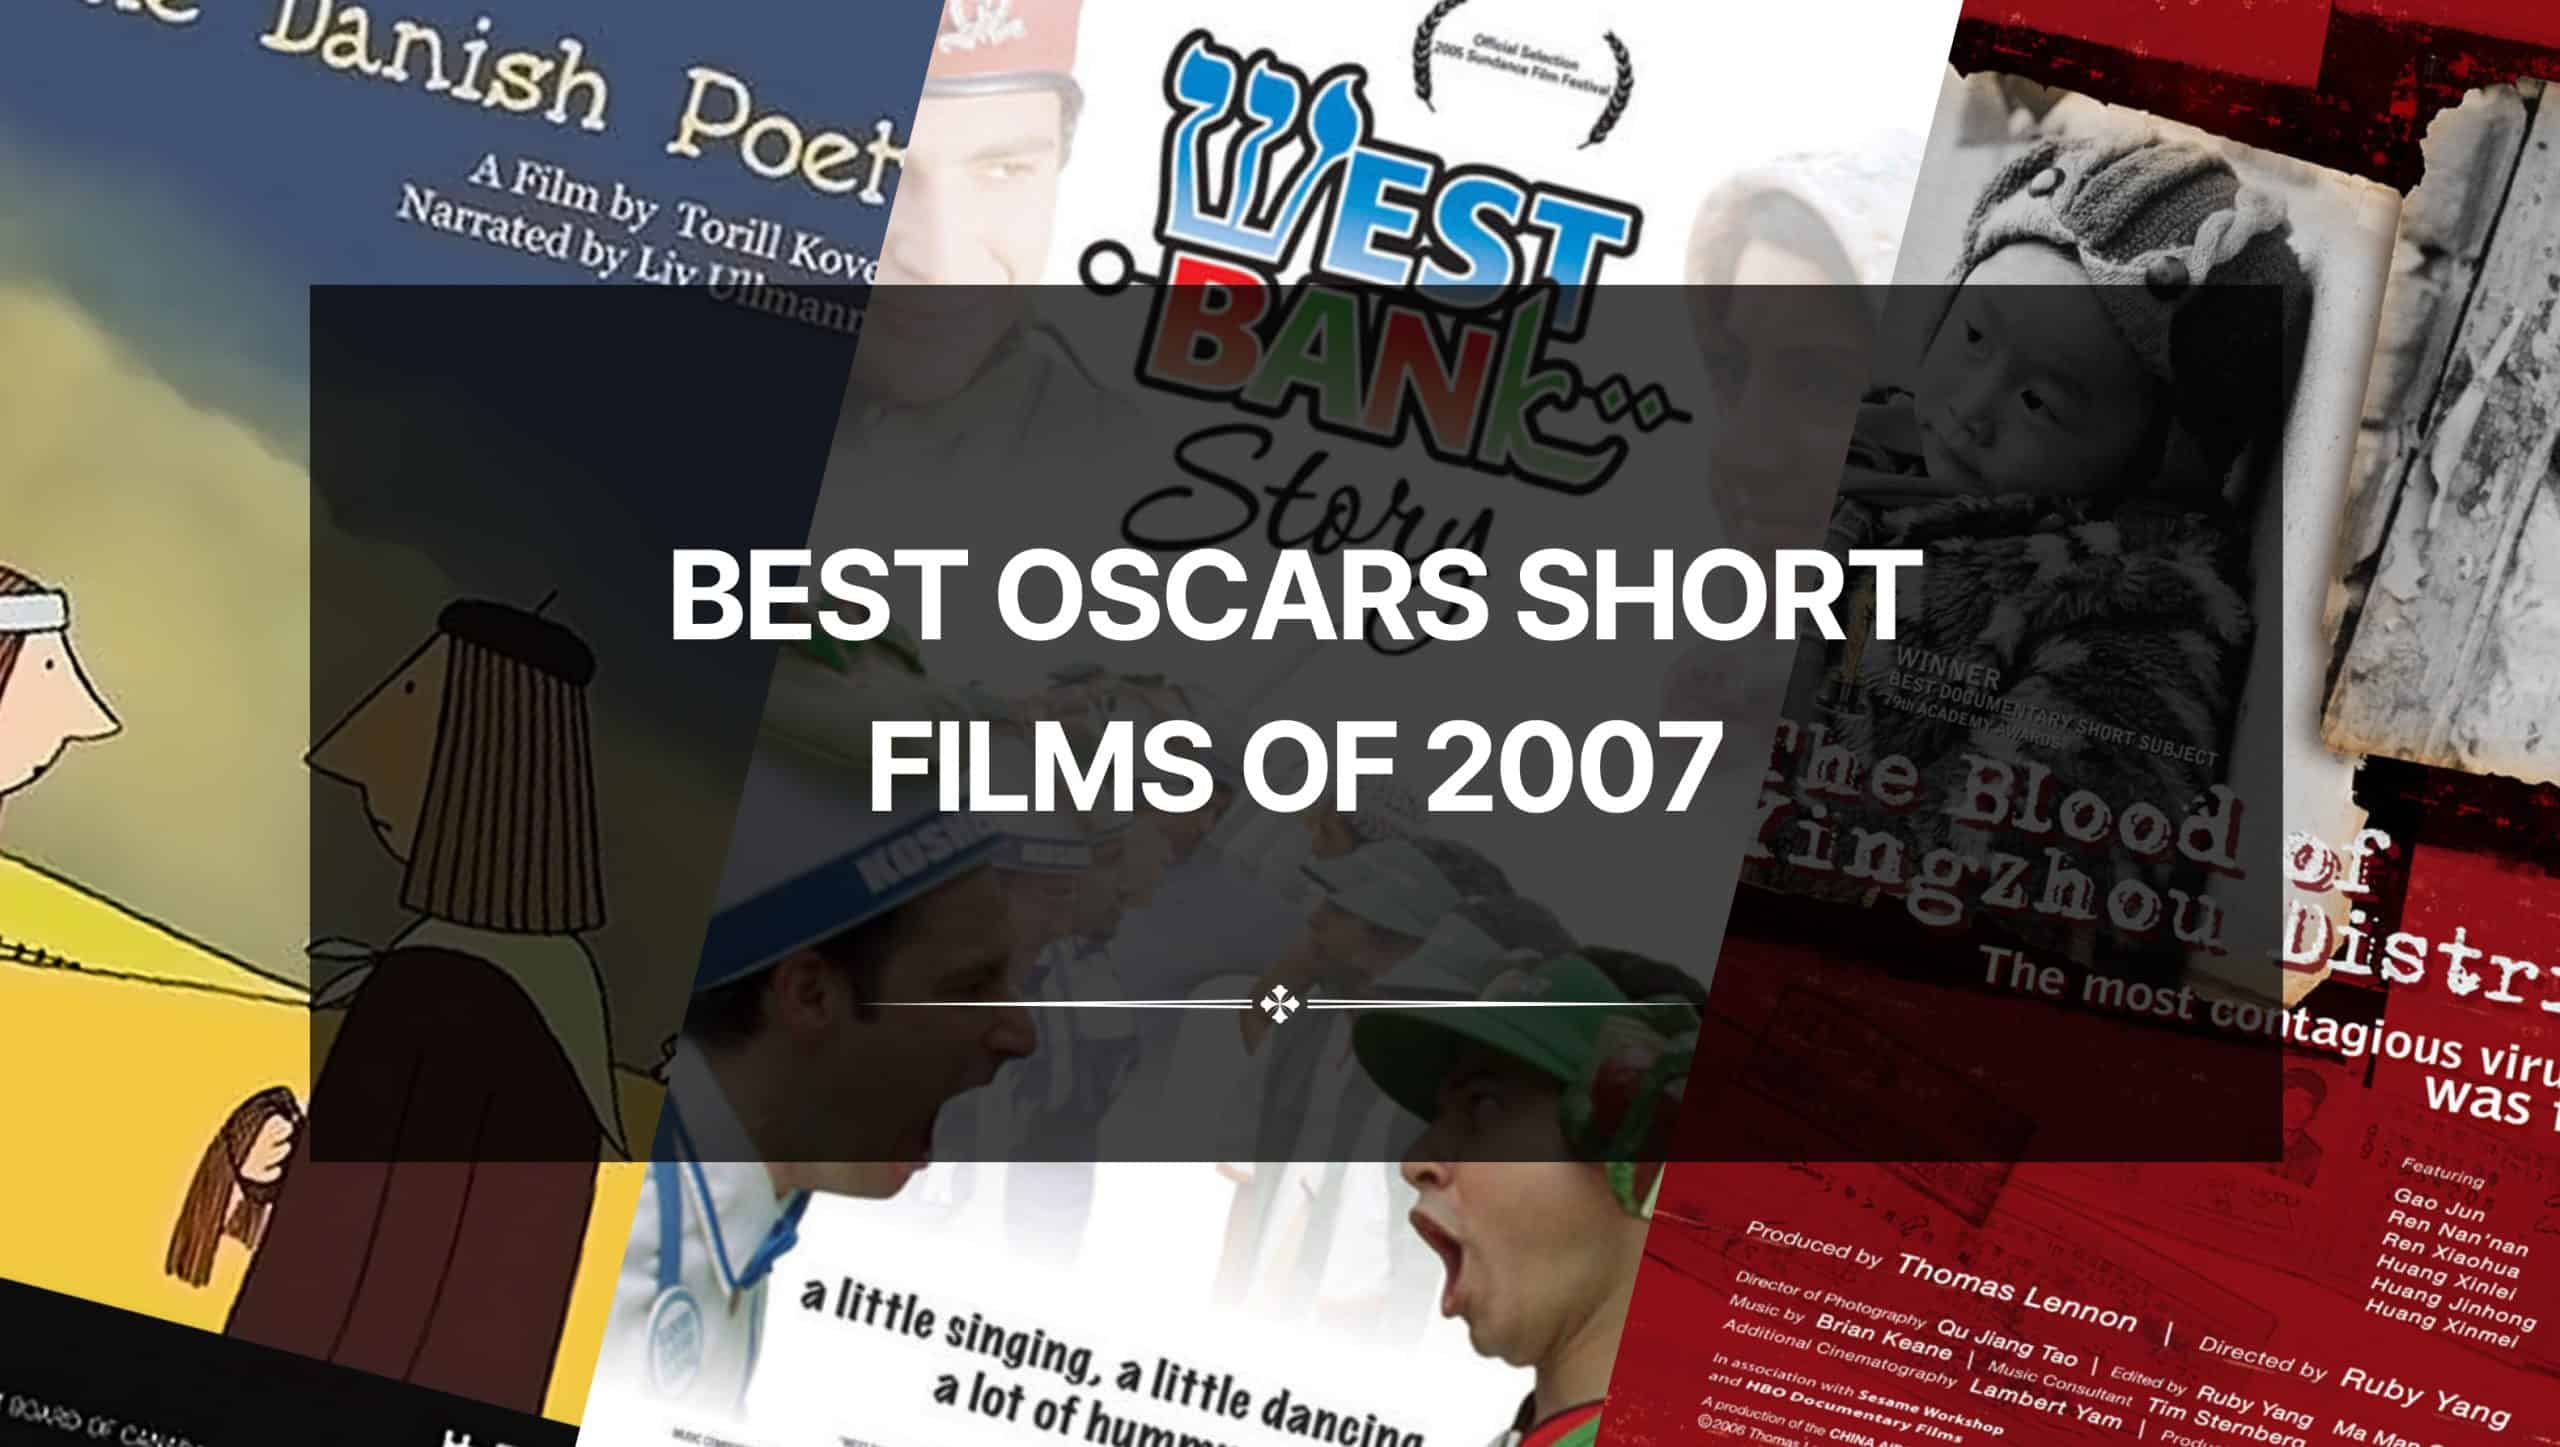 Best Oscars Short Films of 2007